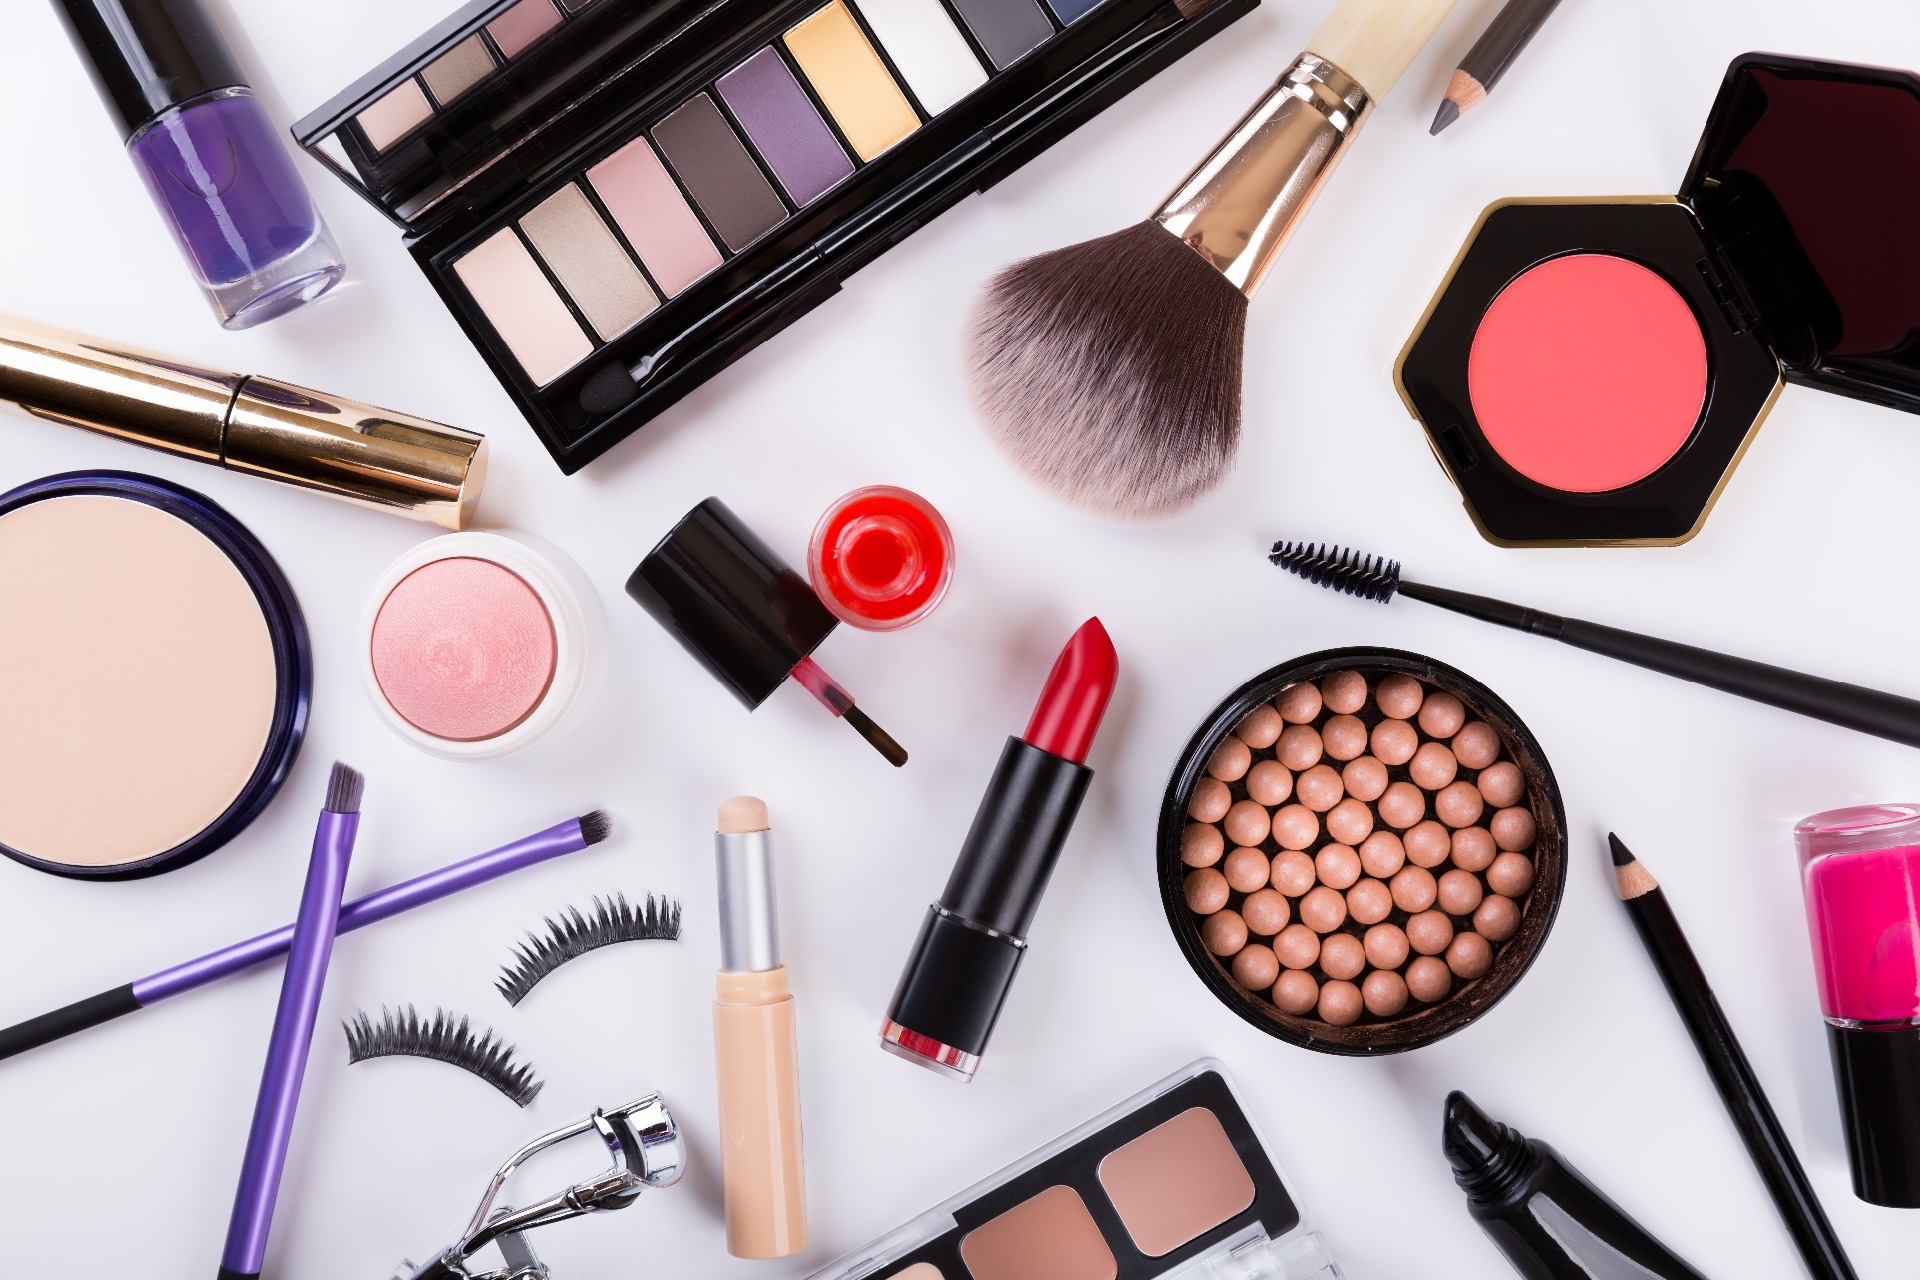 A variety of cosmetic products, including mascara, eyelashes, brushes, eyeshadow, lipstick and blusher.